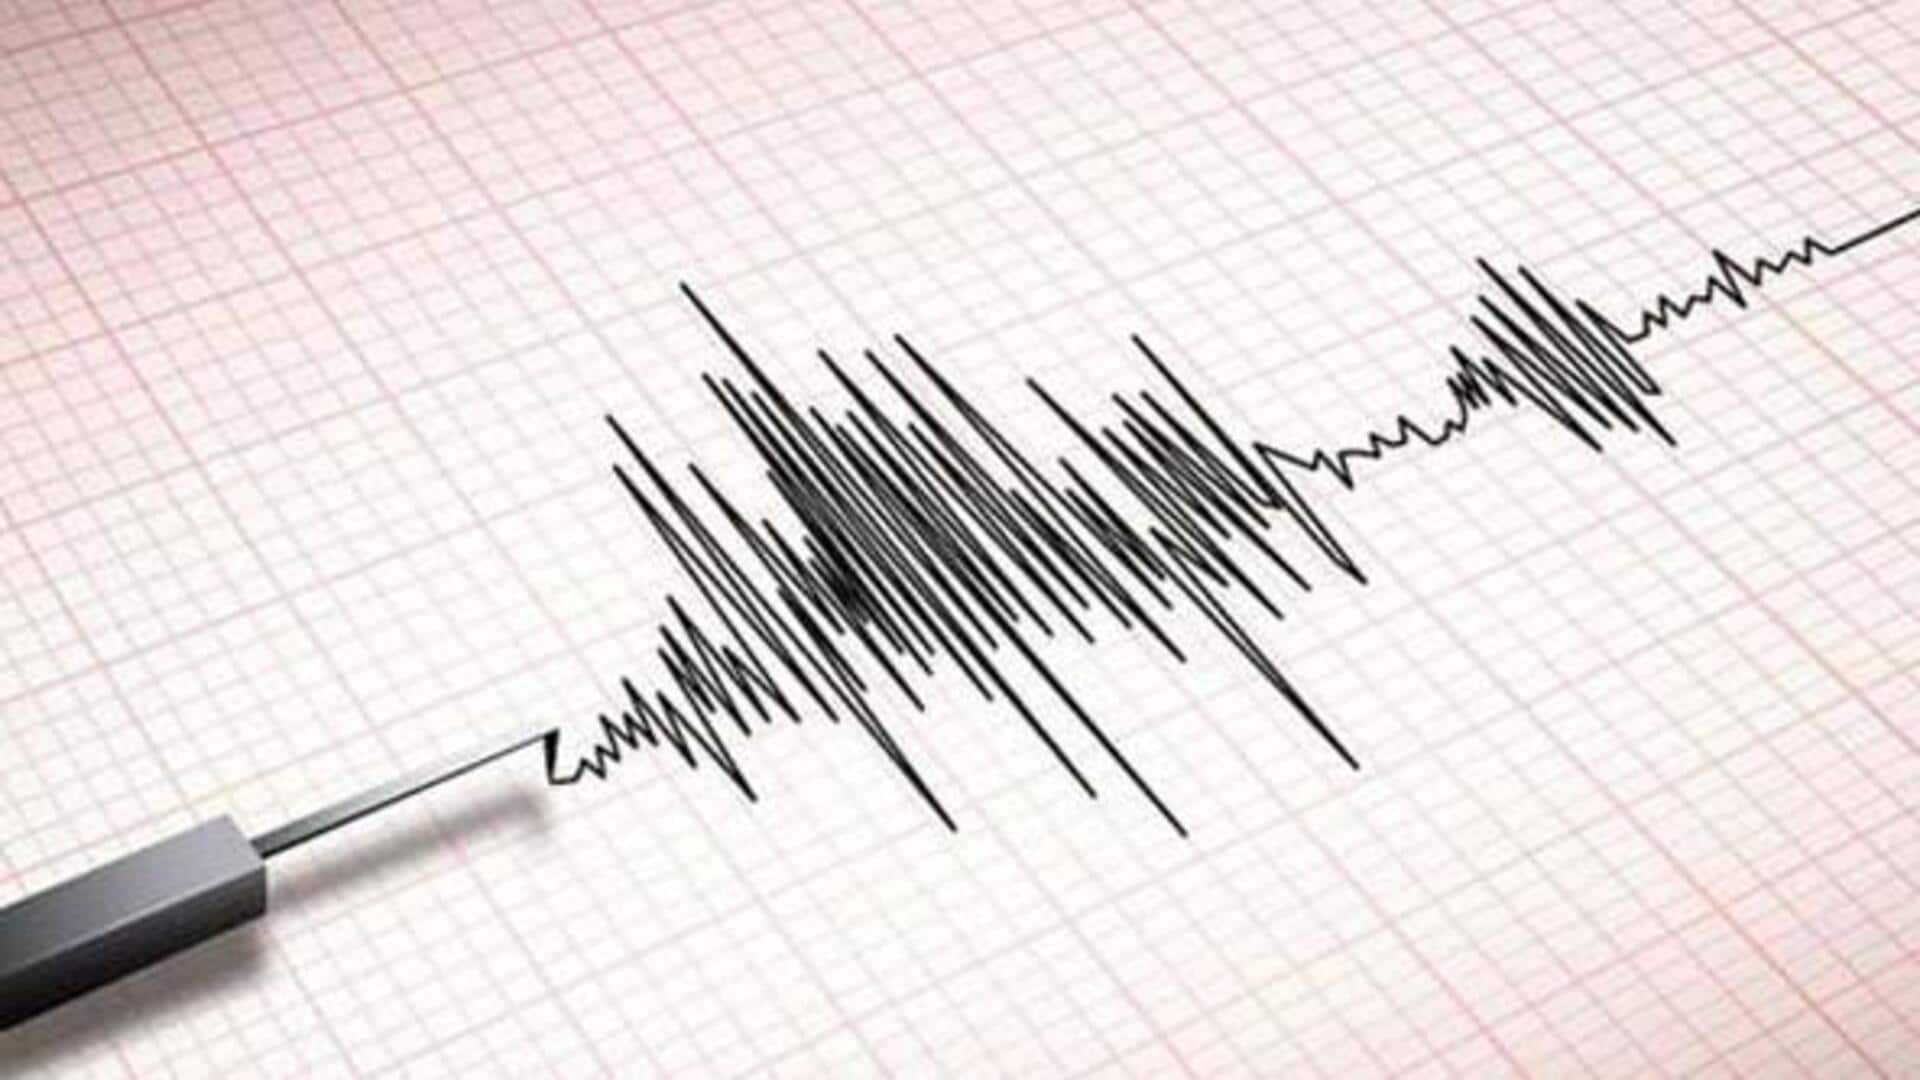 Earthquake: ఫిలిప్పీన్స్‌లో 6.7 తీవ్రతతో భారీ భూకంపం..ఊగిపోయిన బిల్డింగ్స్